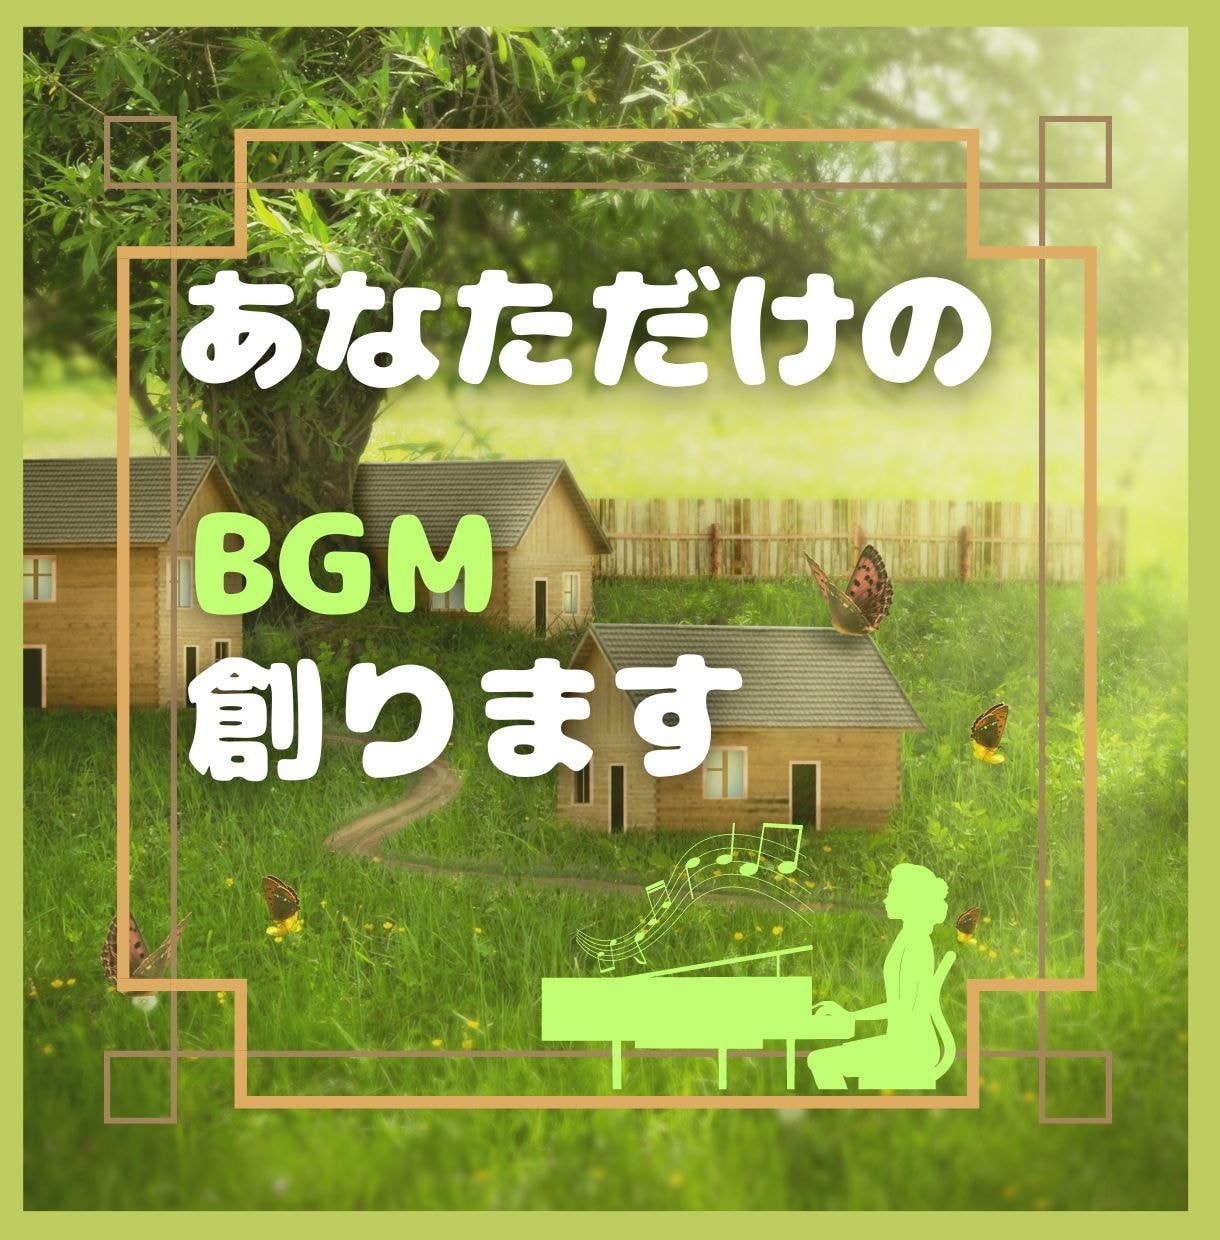 BGM・劇伴・ゲーム・動画・アニメ音楽制作します ゲーム、劇伴、Youtube、アニメなど適した音楽をご提供！ イメージ1